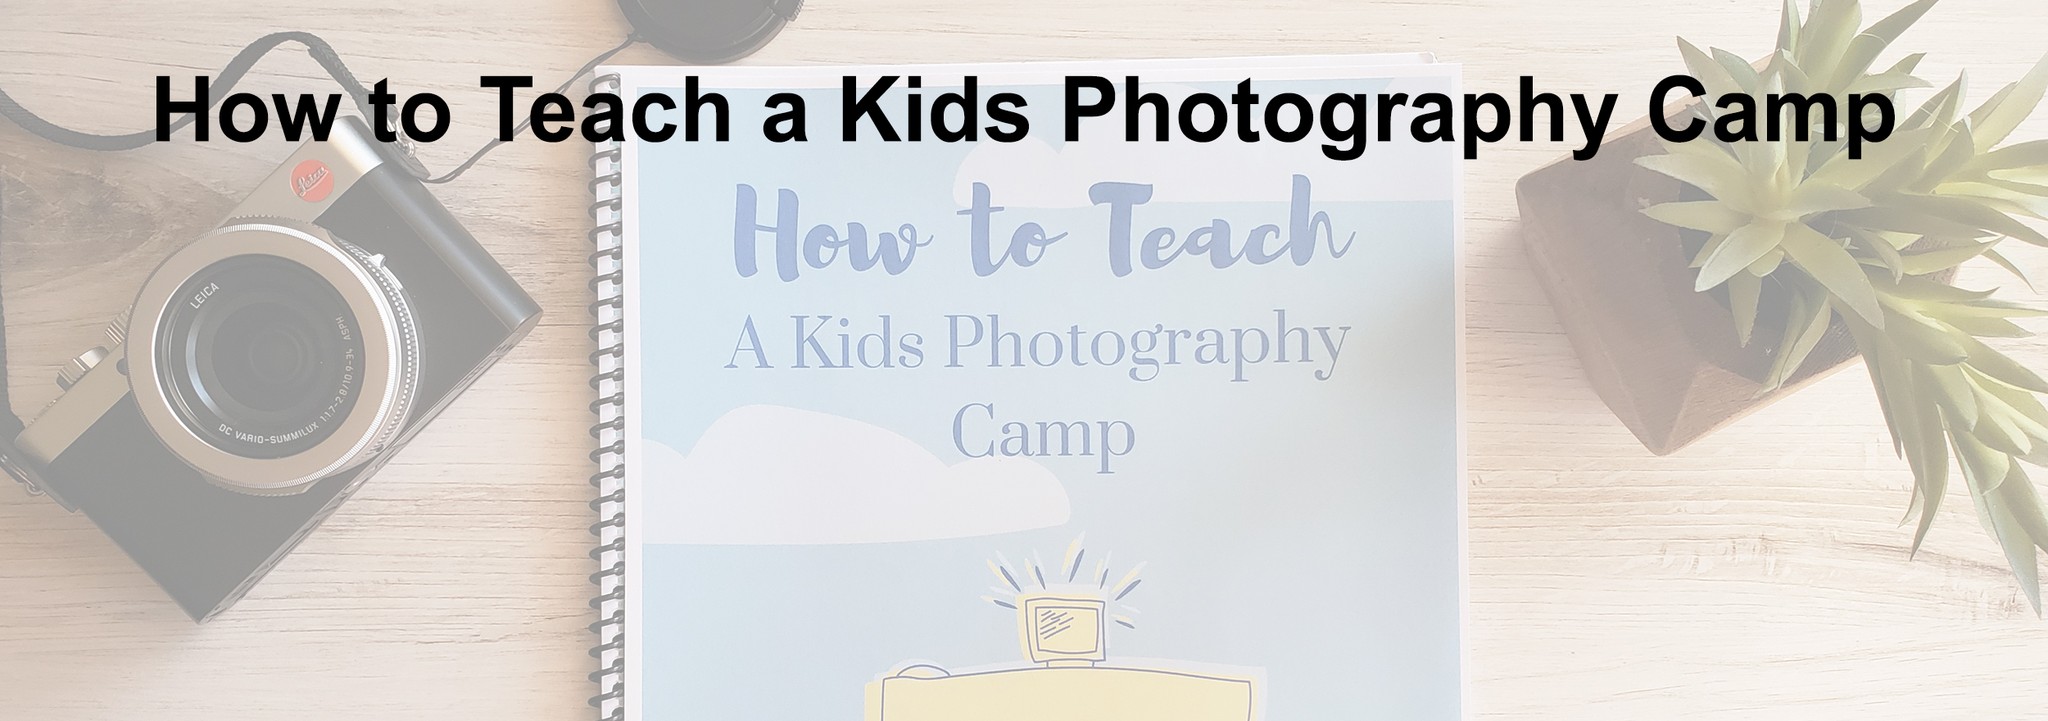 How to teach a kids photography camp